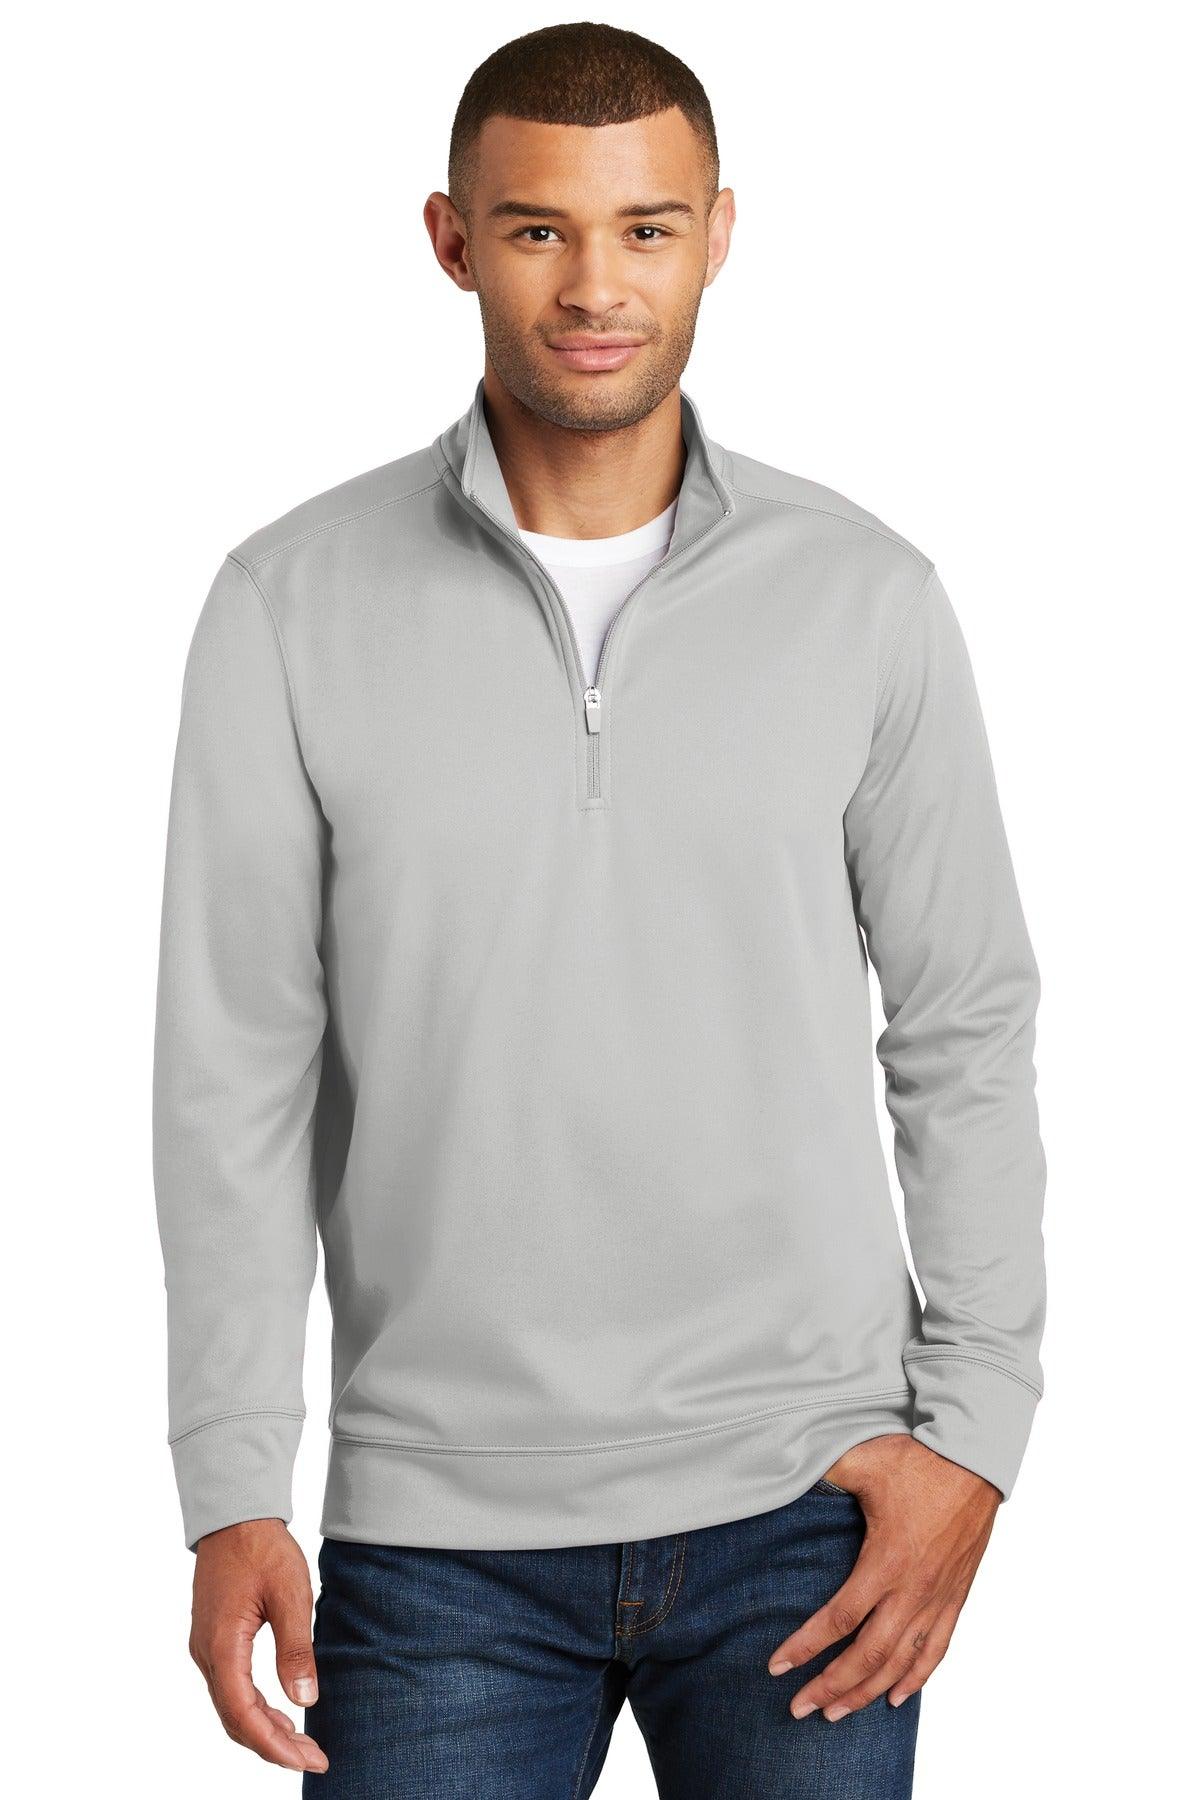 Port & Company Performance Fleece 1/4-Zip Pullover Sweatshirt. PC590Q - Dresses Max